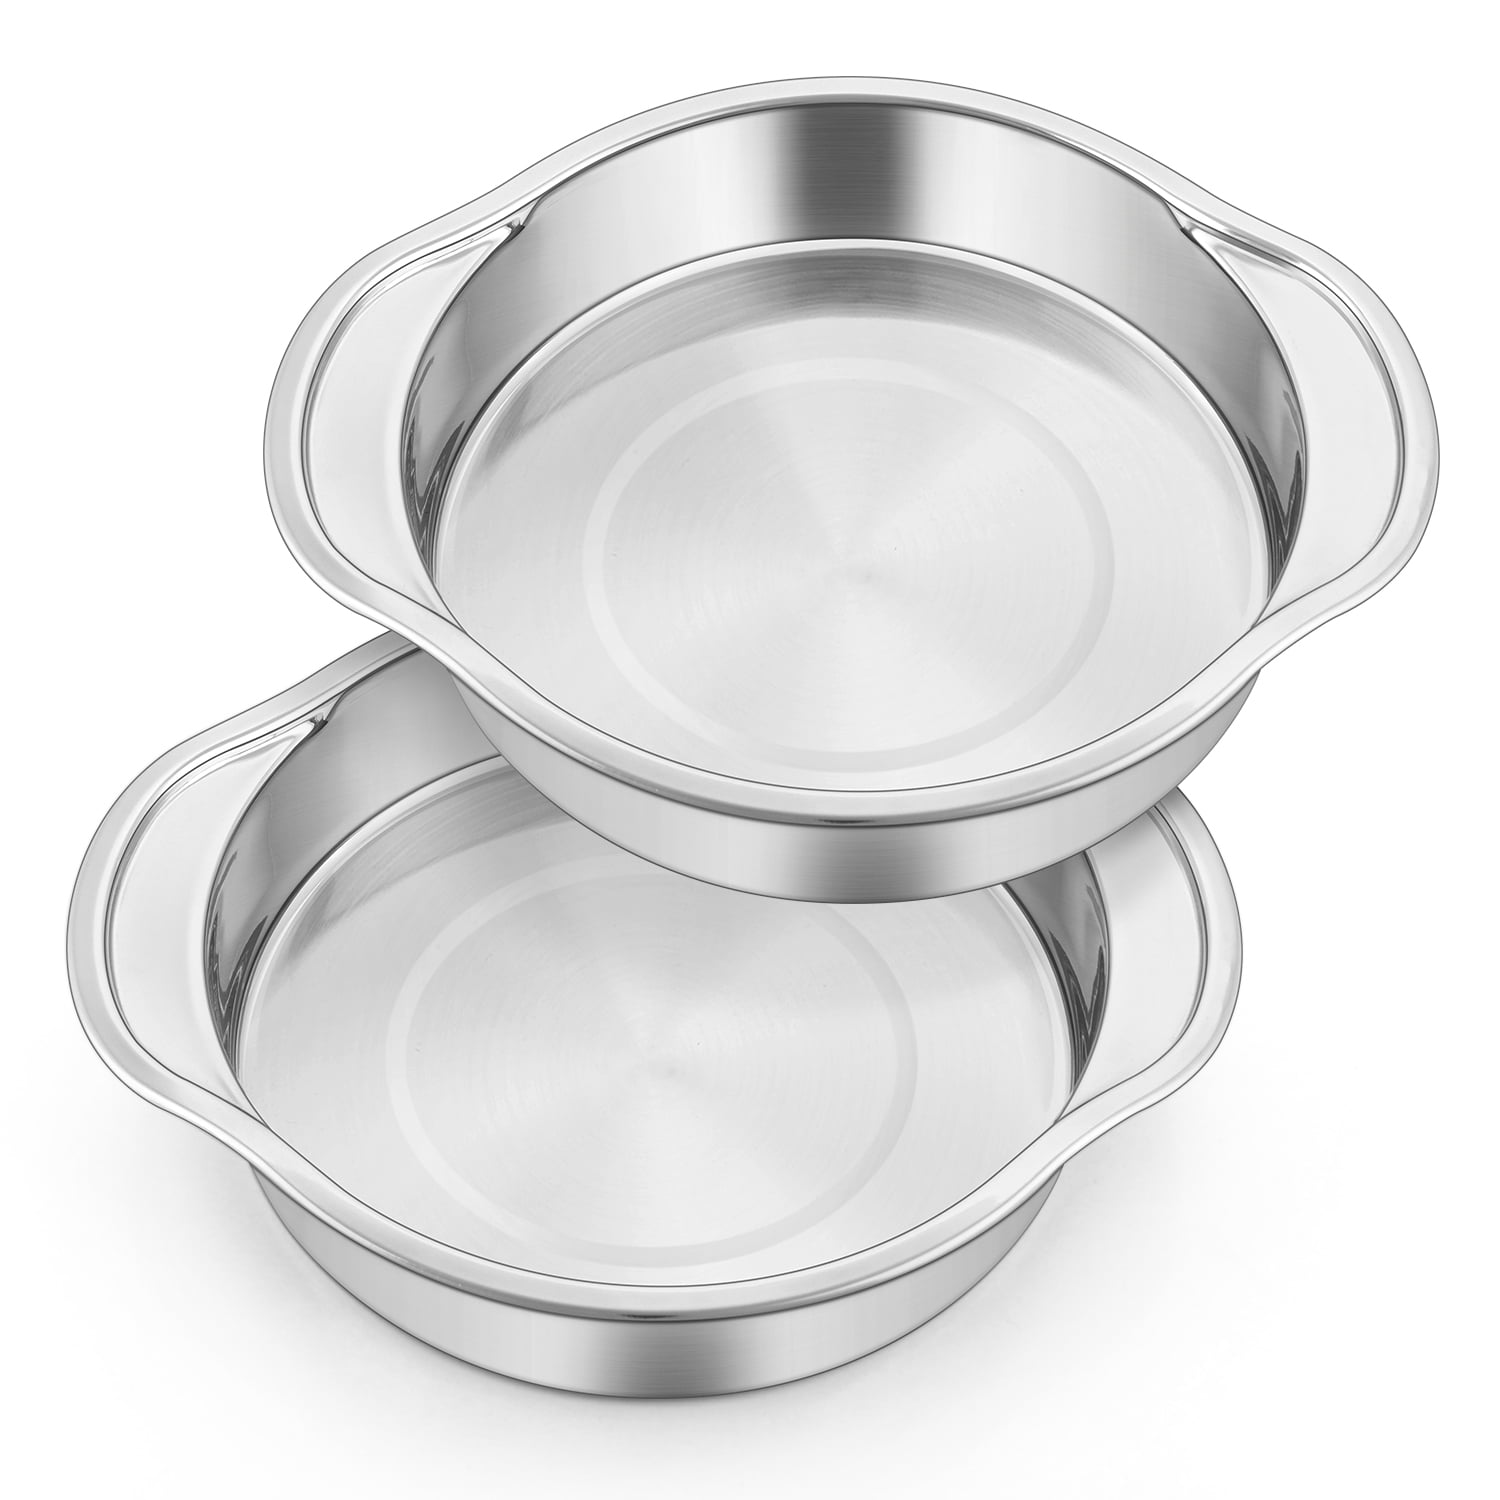 Walchoice Cake Pans Set of 3, Stainless Steel Round Tier Baking Pan, Deep  Metal Cake Tins - 6” x 3”, Mirror Finish & Easy Clean